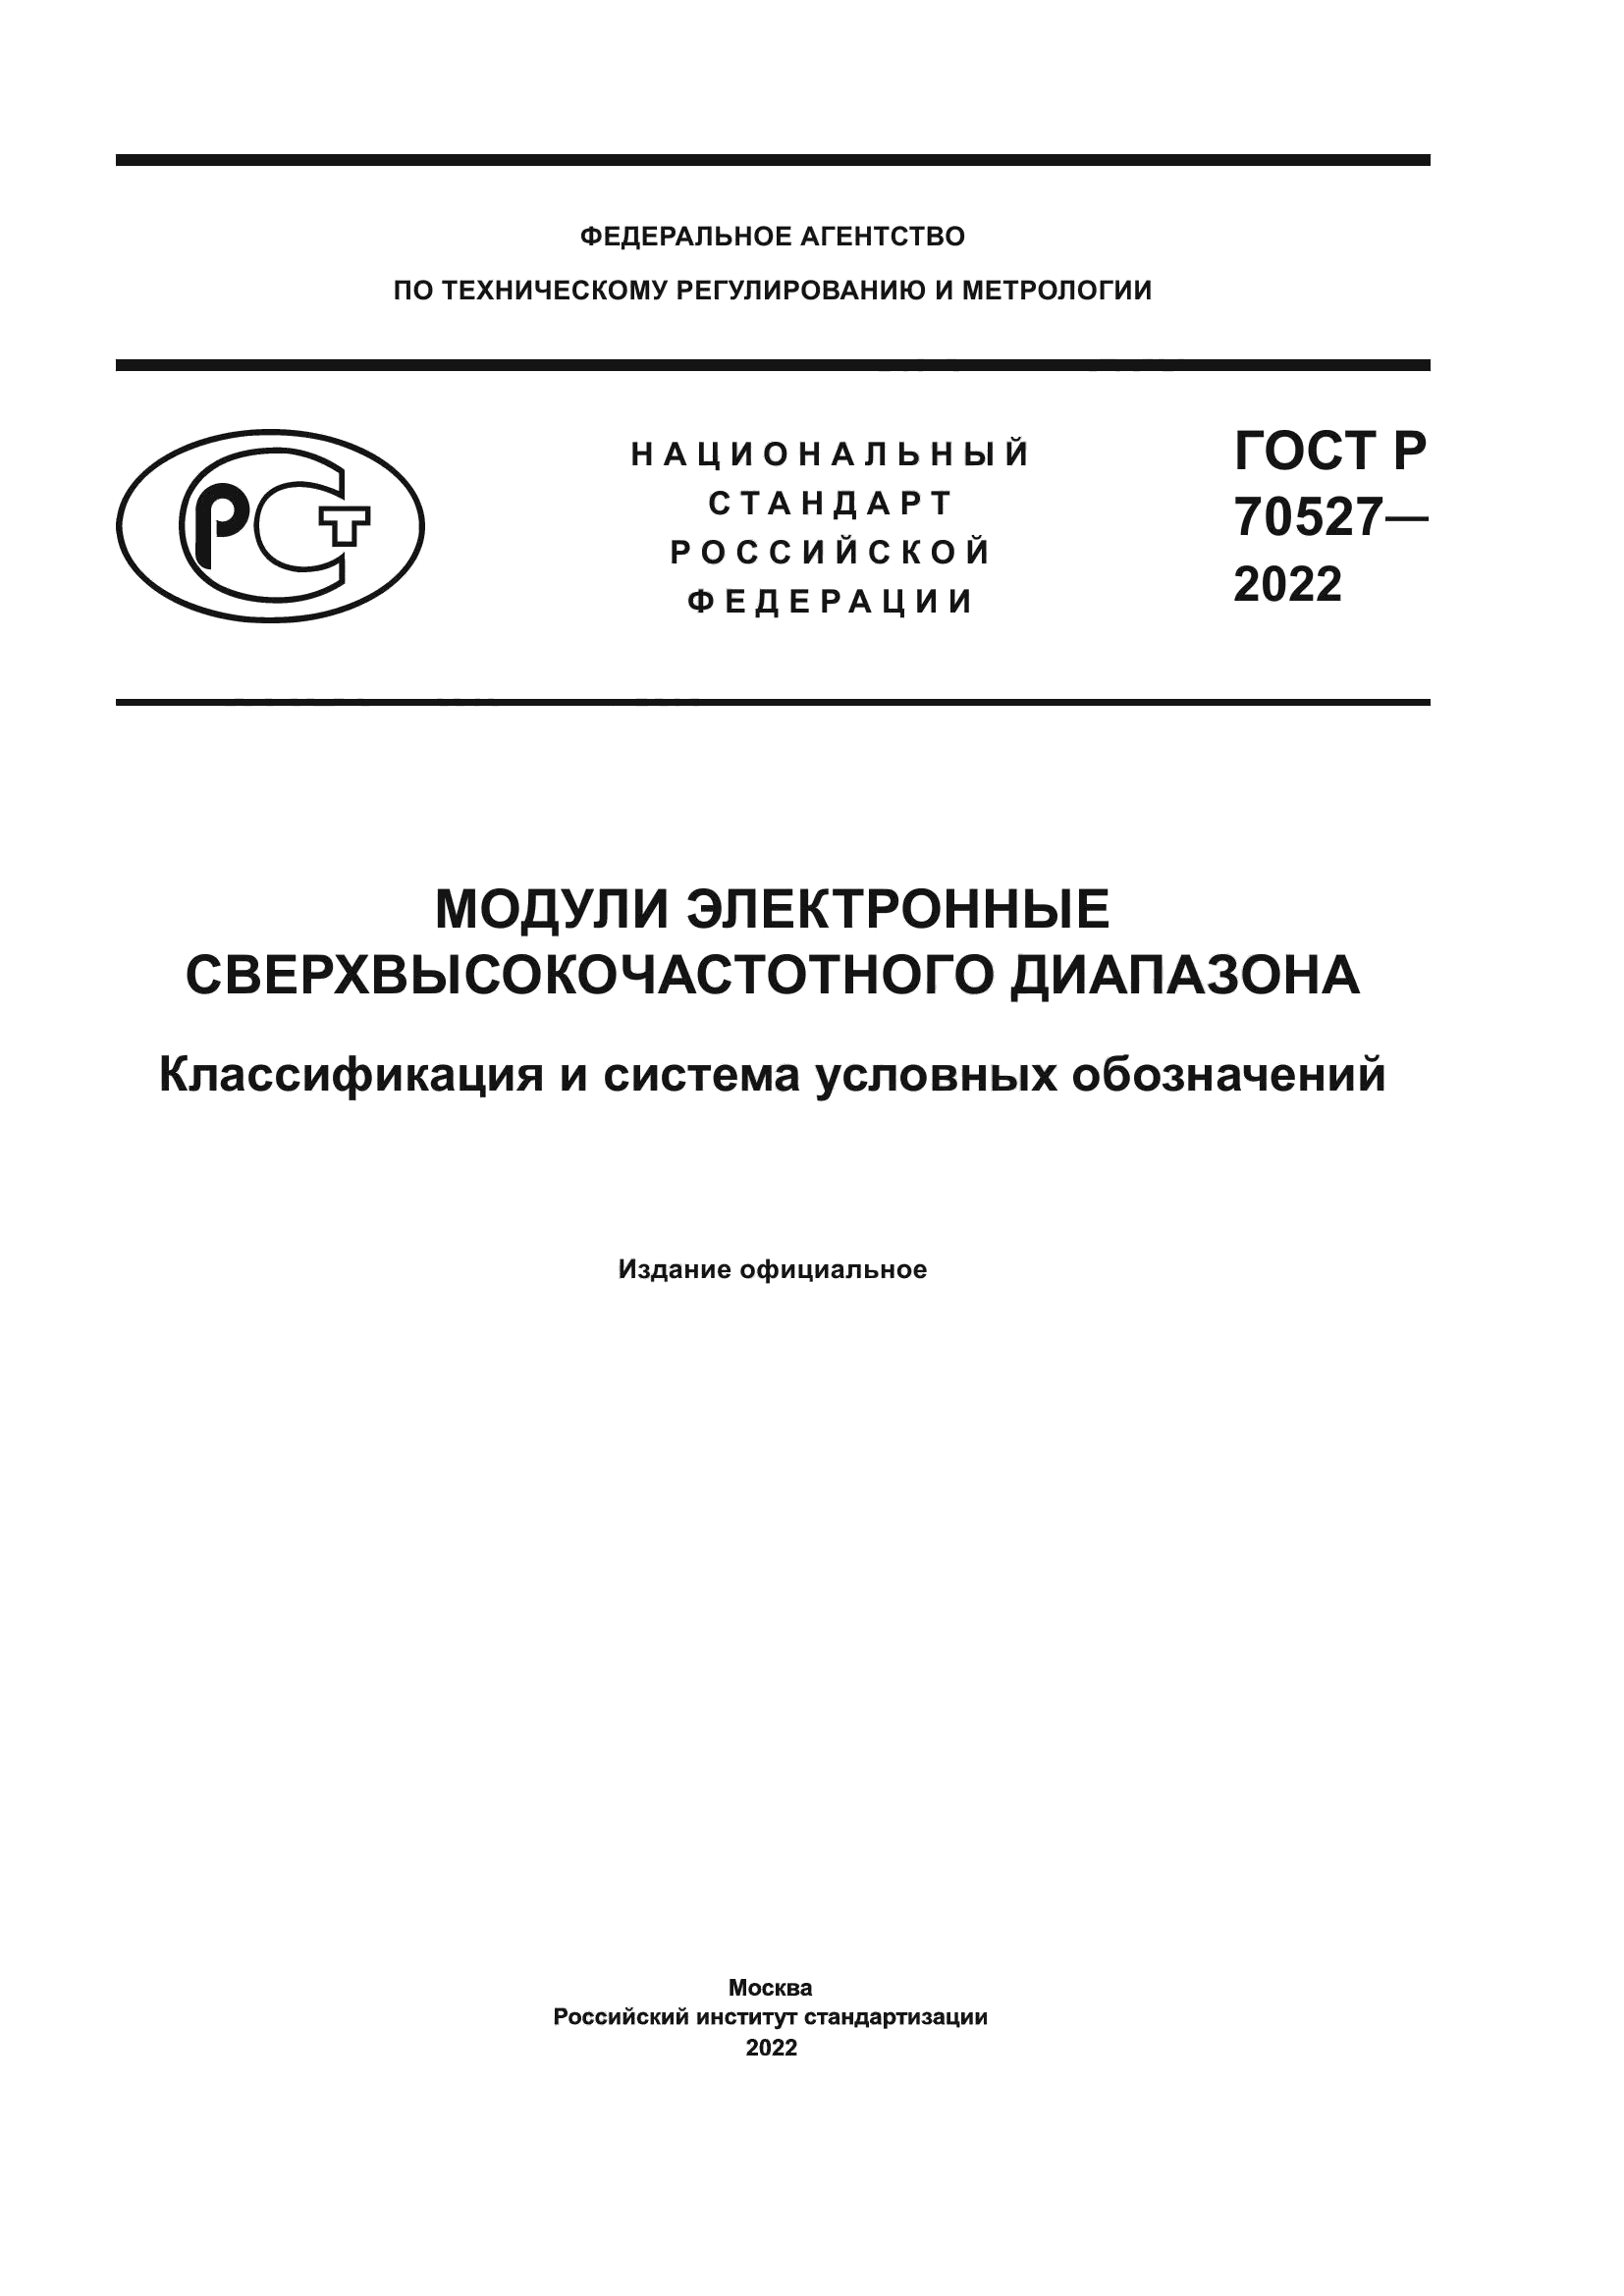 ГОСТ Р 70527-2022